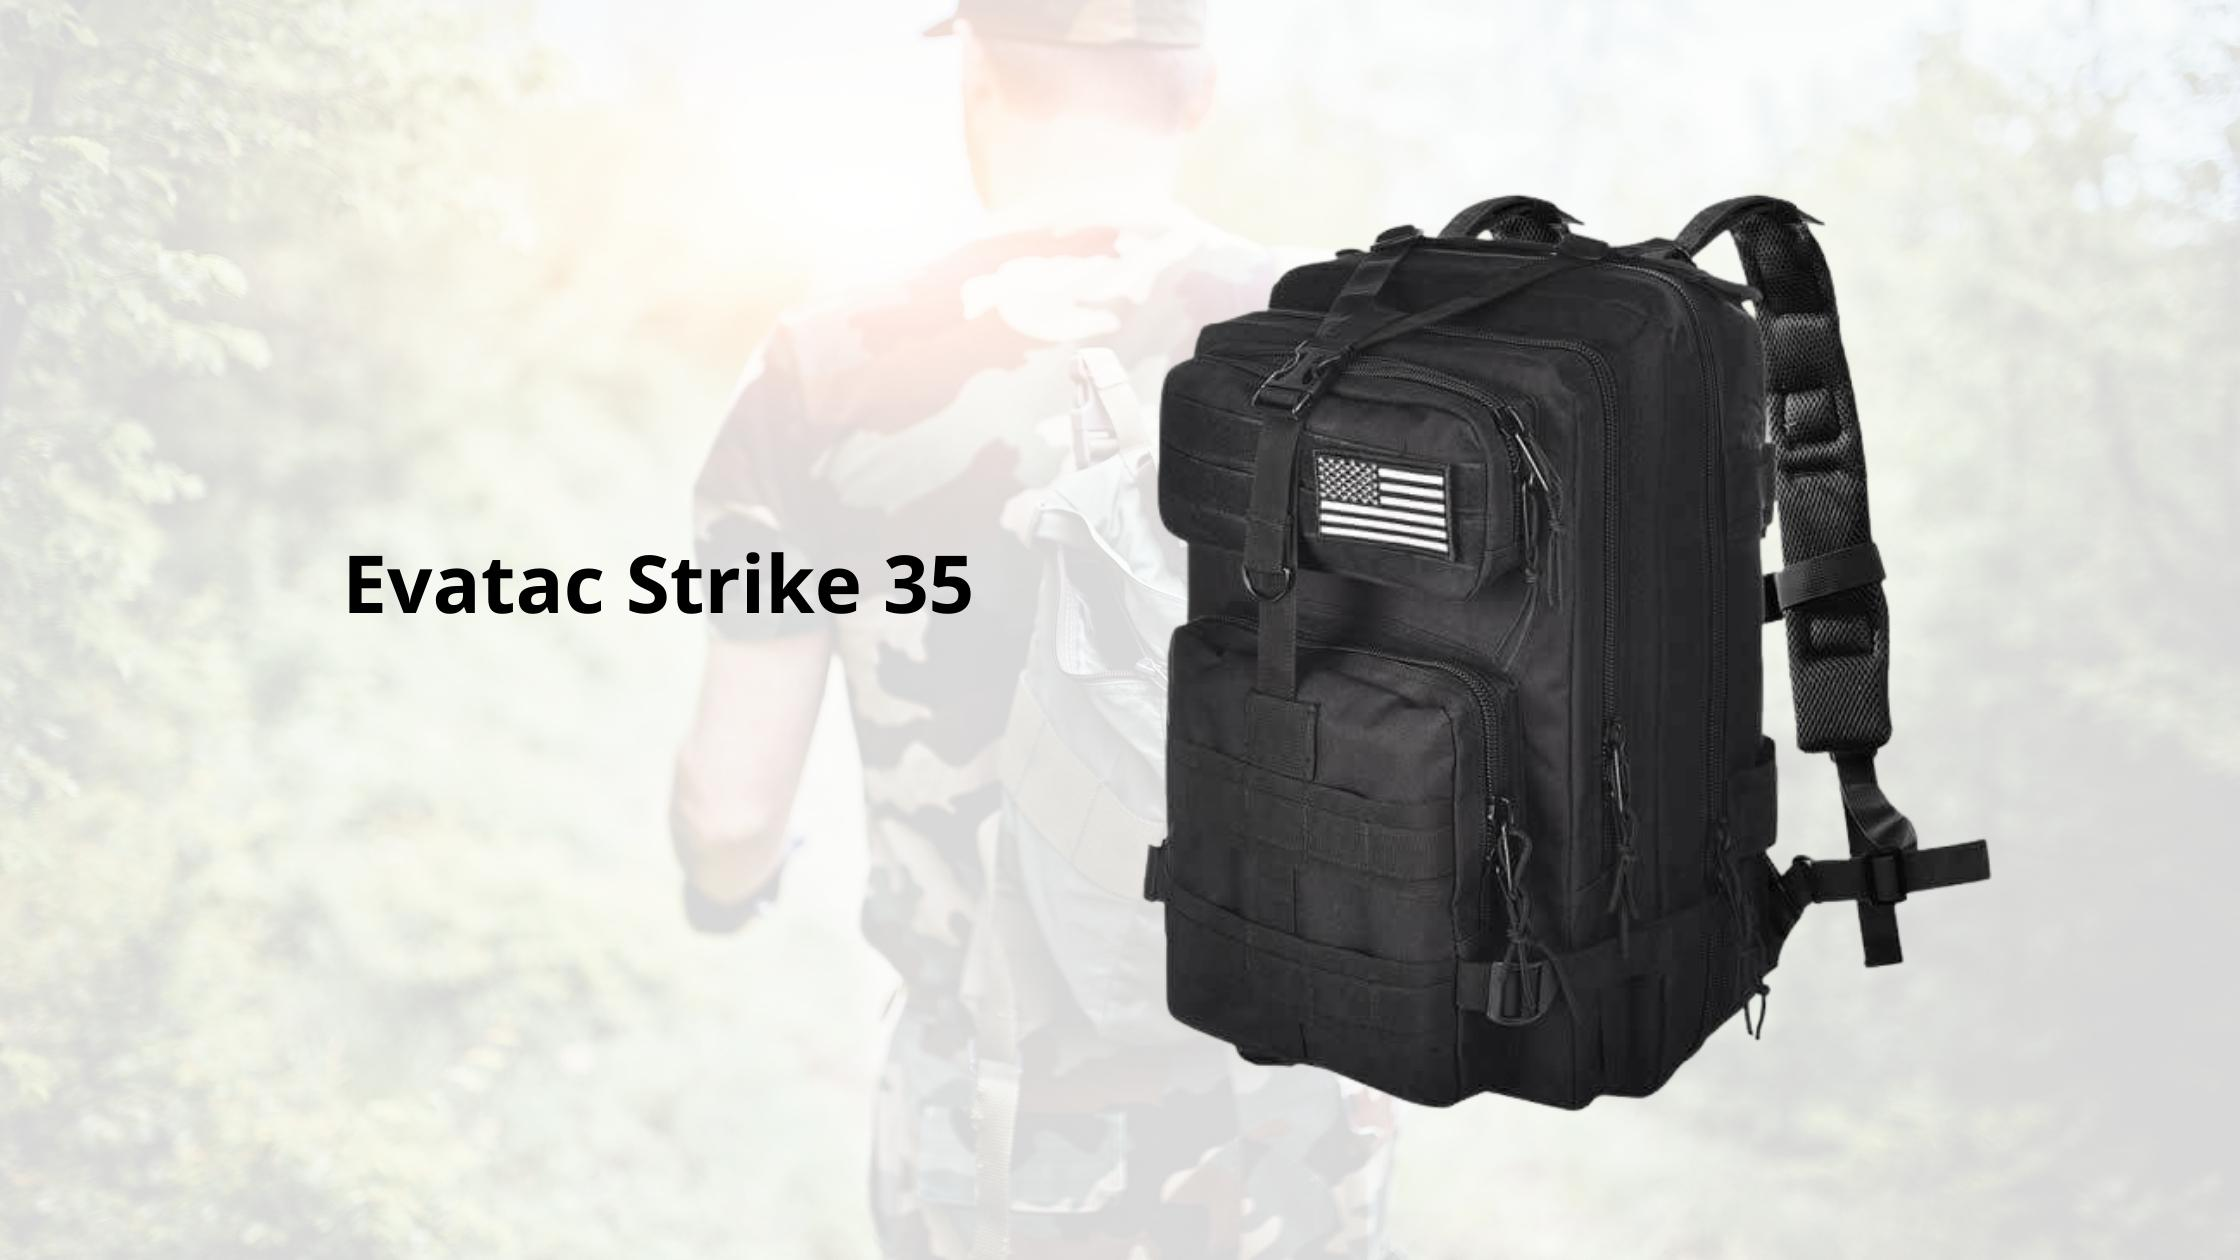 Evatac Strike 35 backpack for outdoor activities